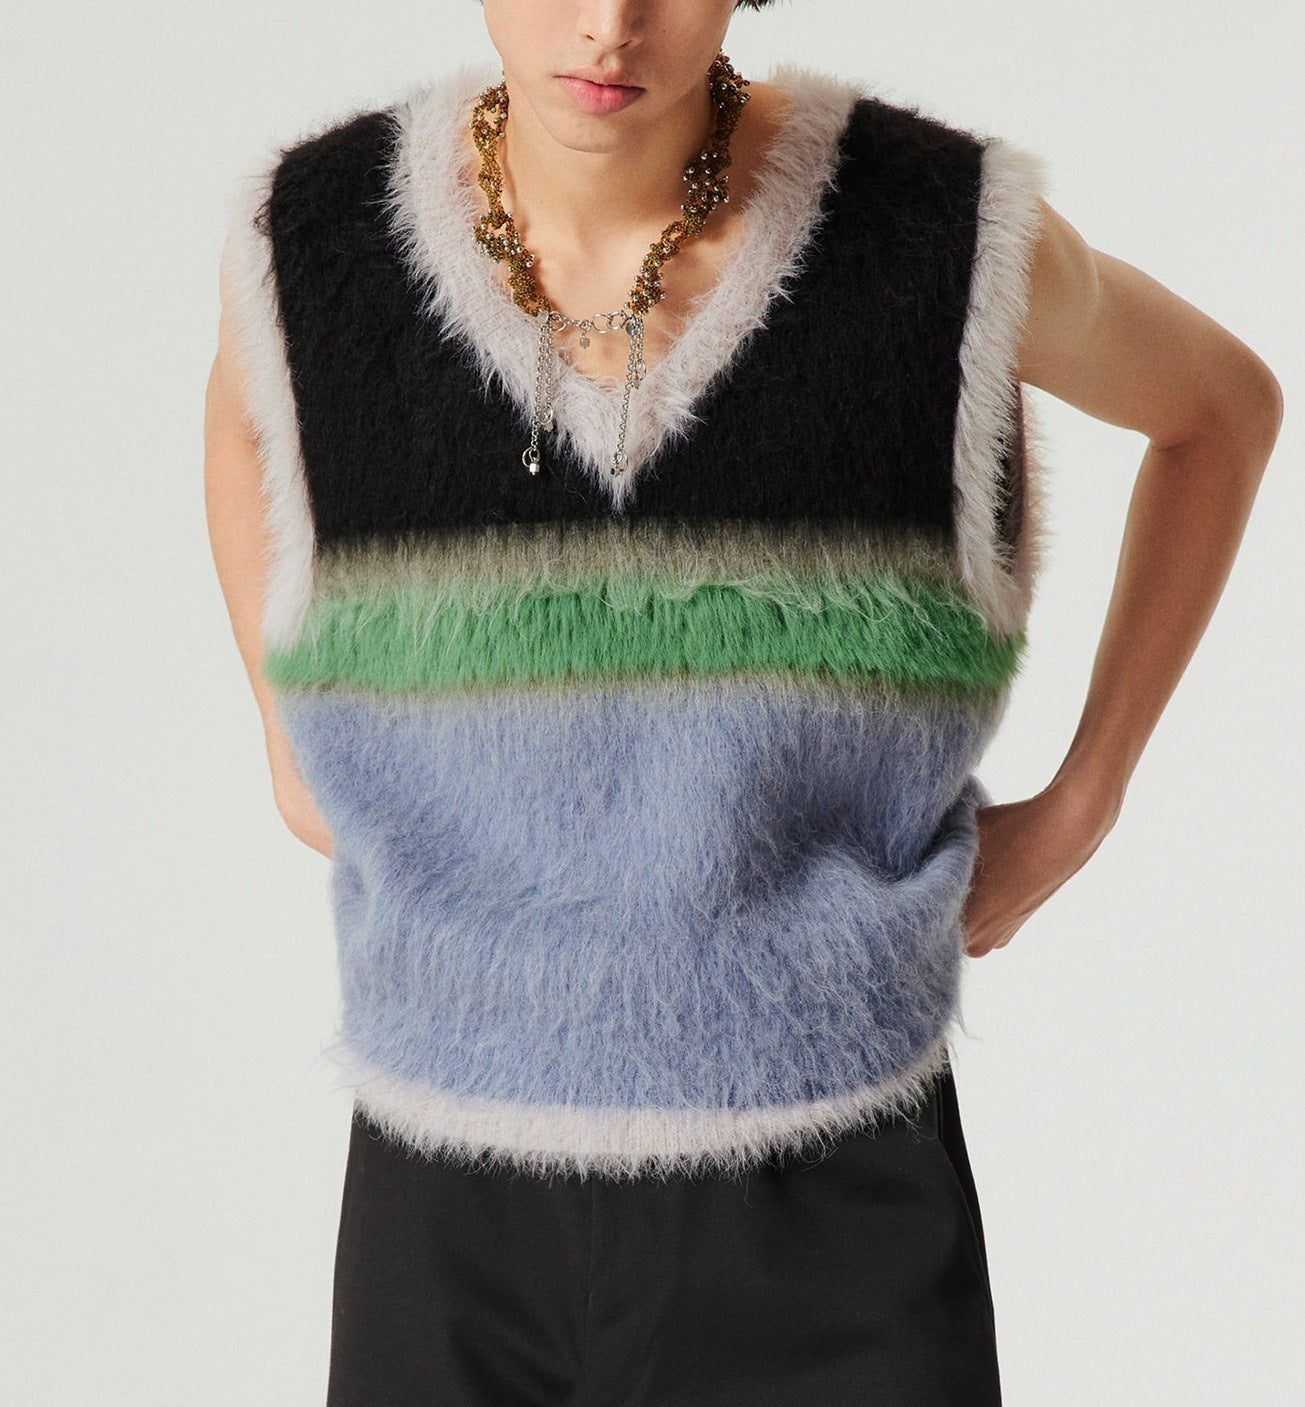 Wool Blended Long Velvet Wool Contrast Color Striped Knitted V-neck Vest Sweater